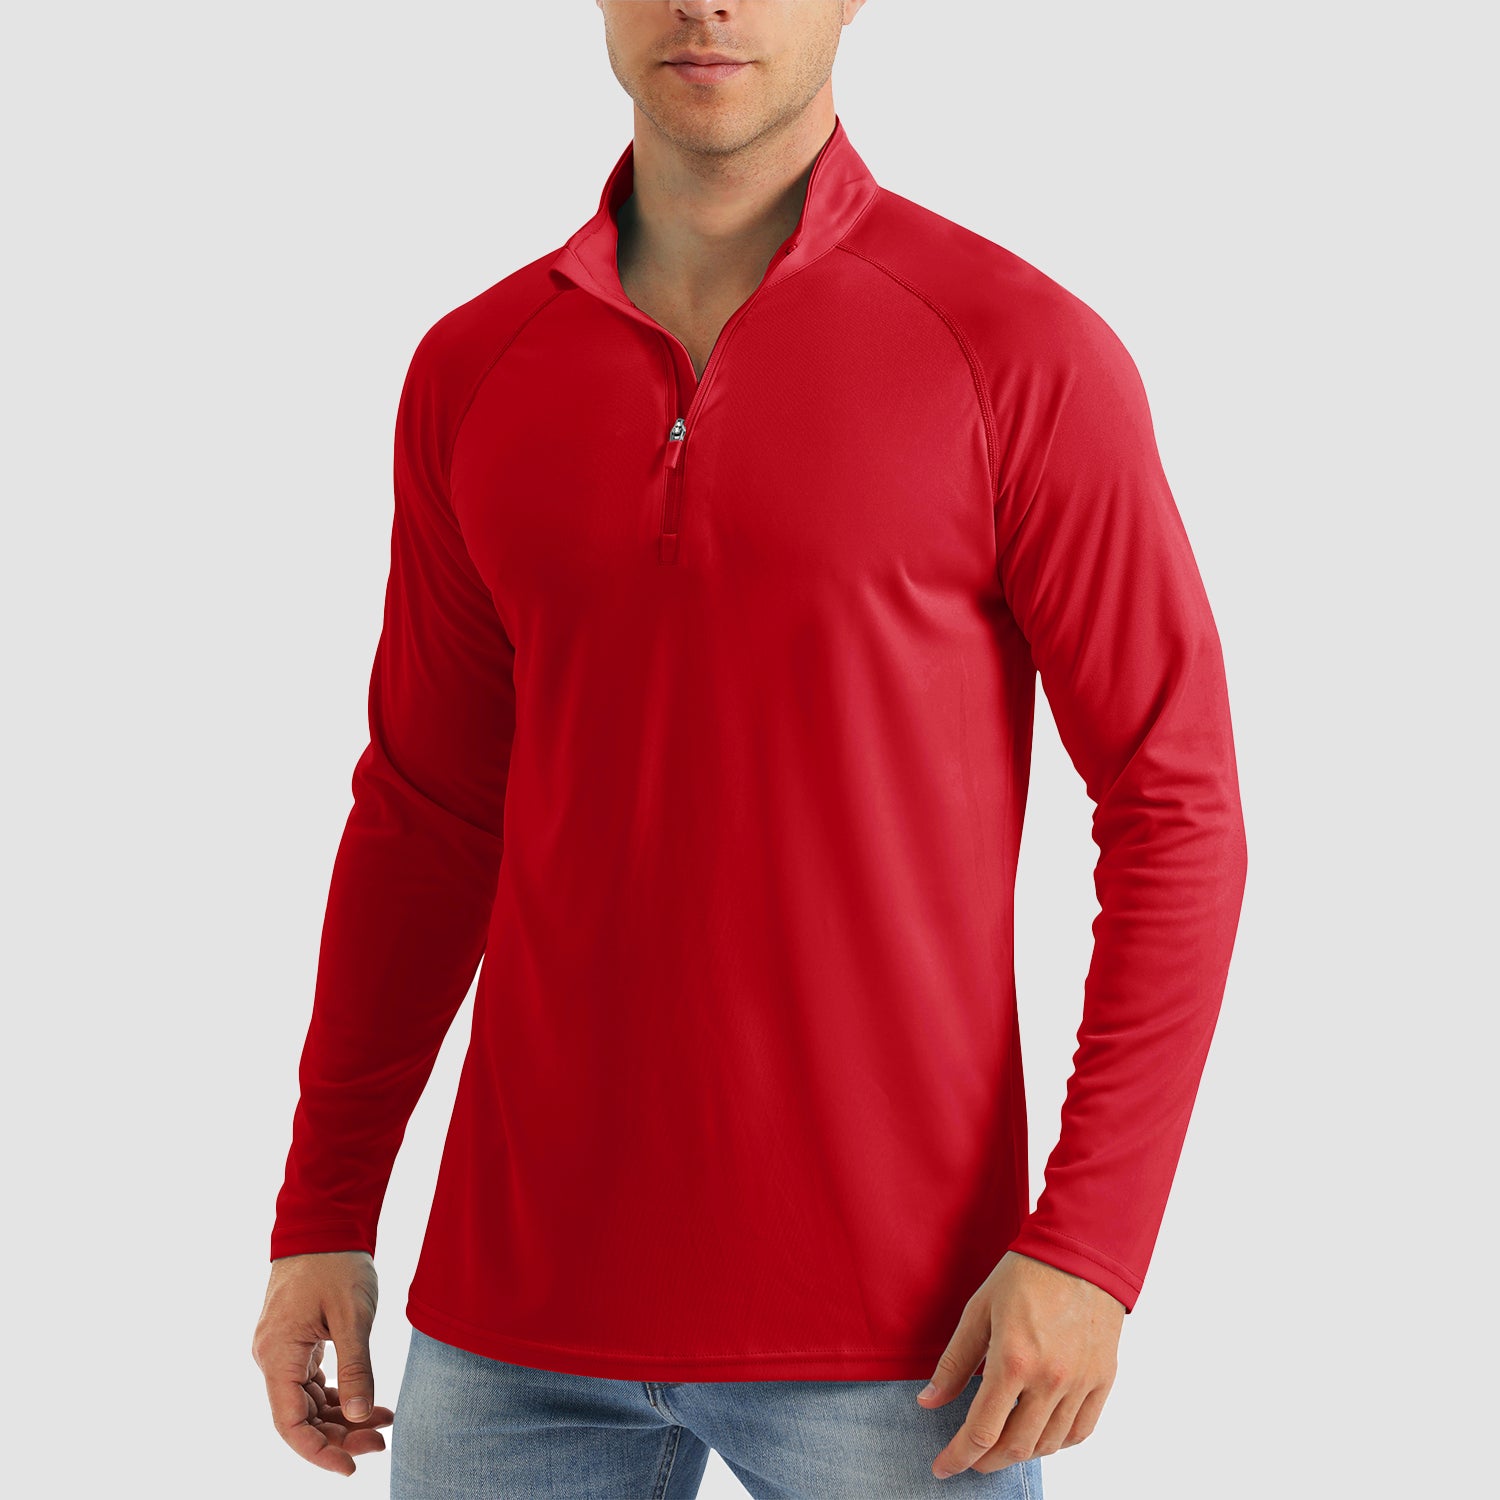 Men's Sun Protection shirts Summer UPF 50+ Long Sleeve Quick Dry